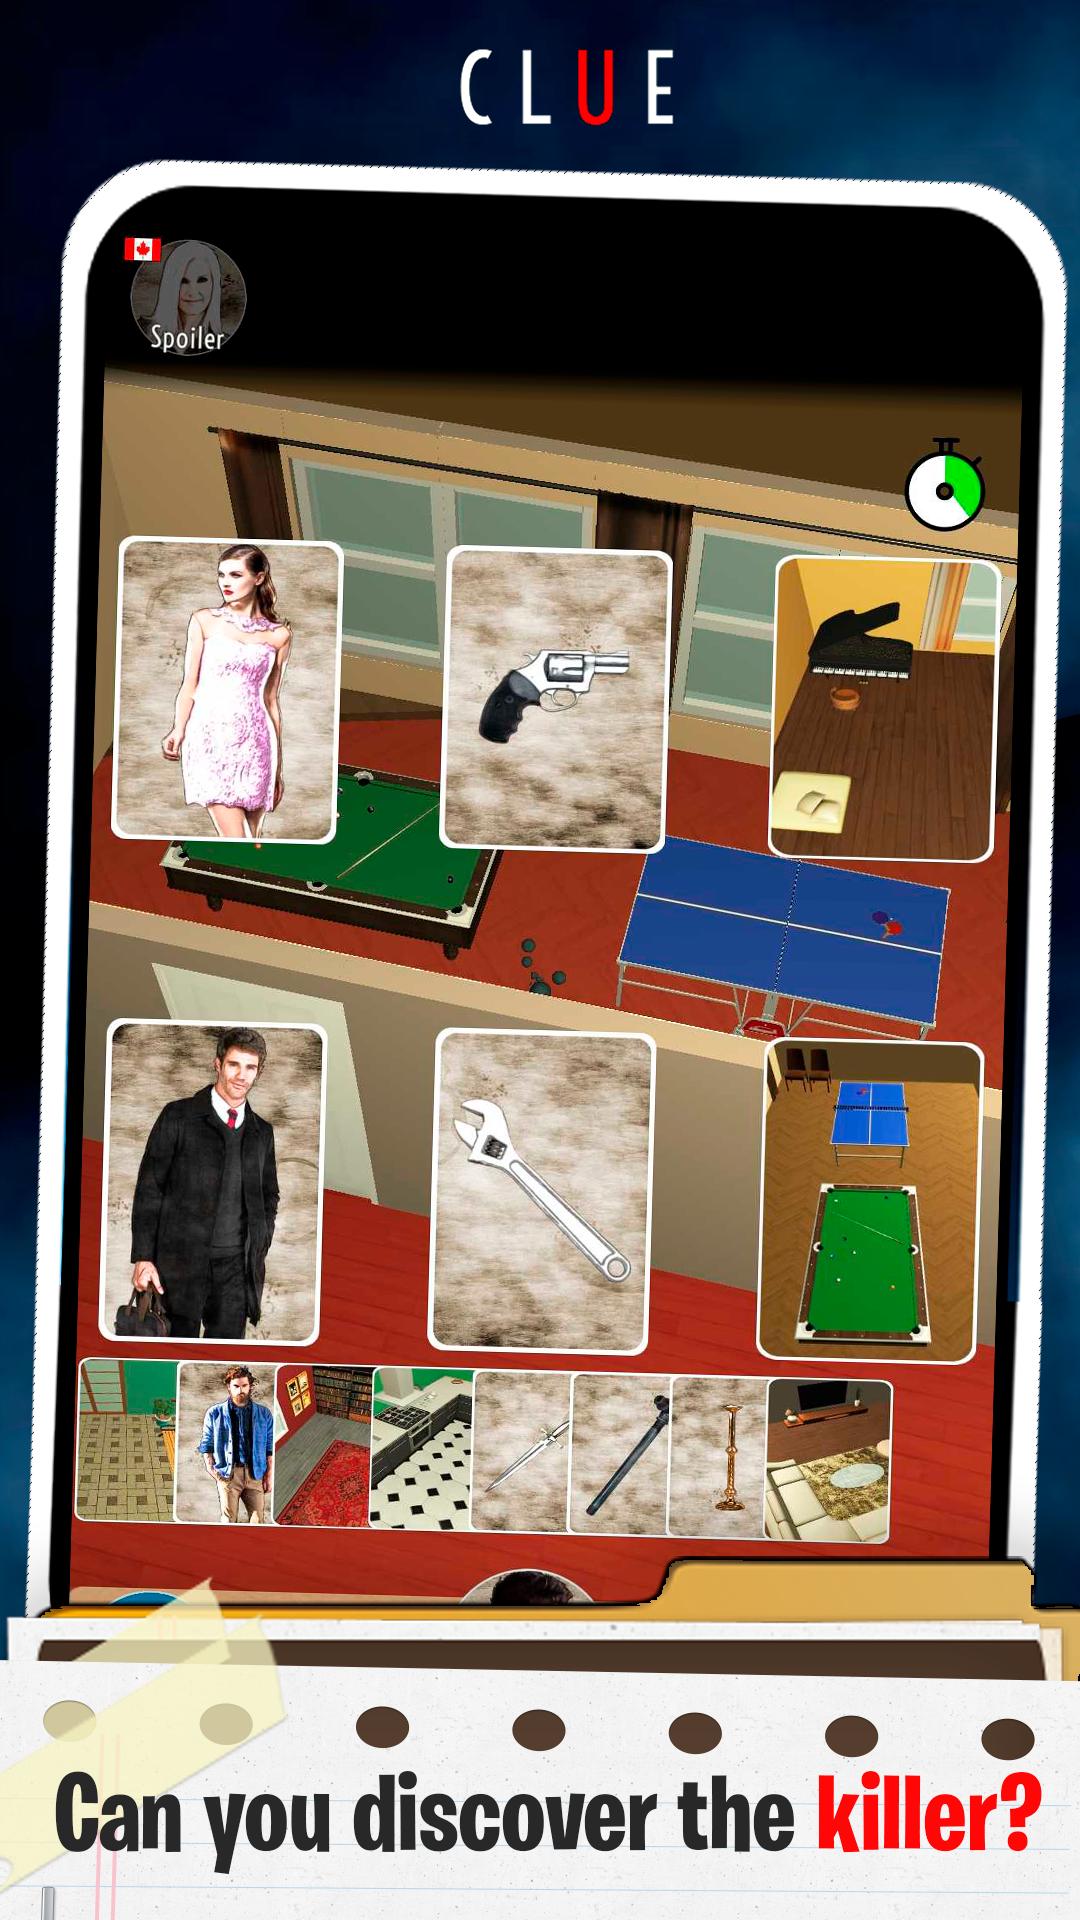 Clue Detective mystery murder criminal board game 2.3 Screenshot 18